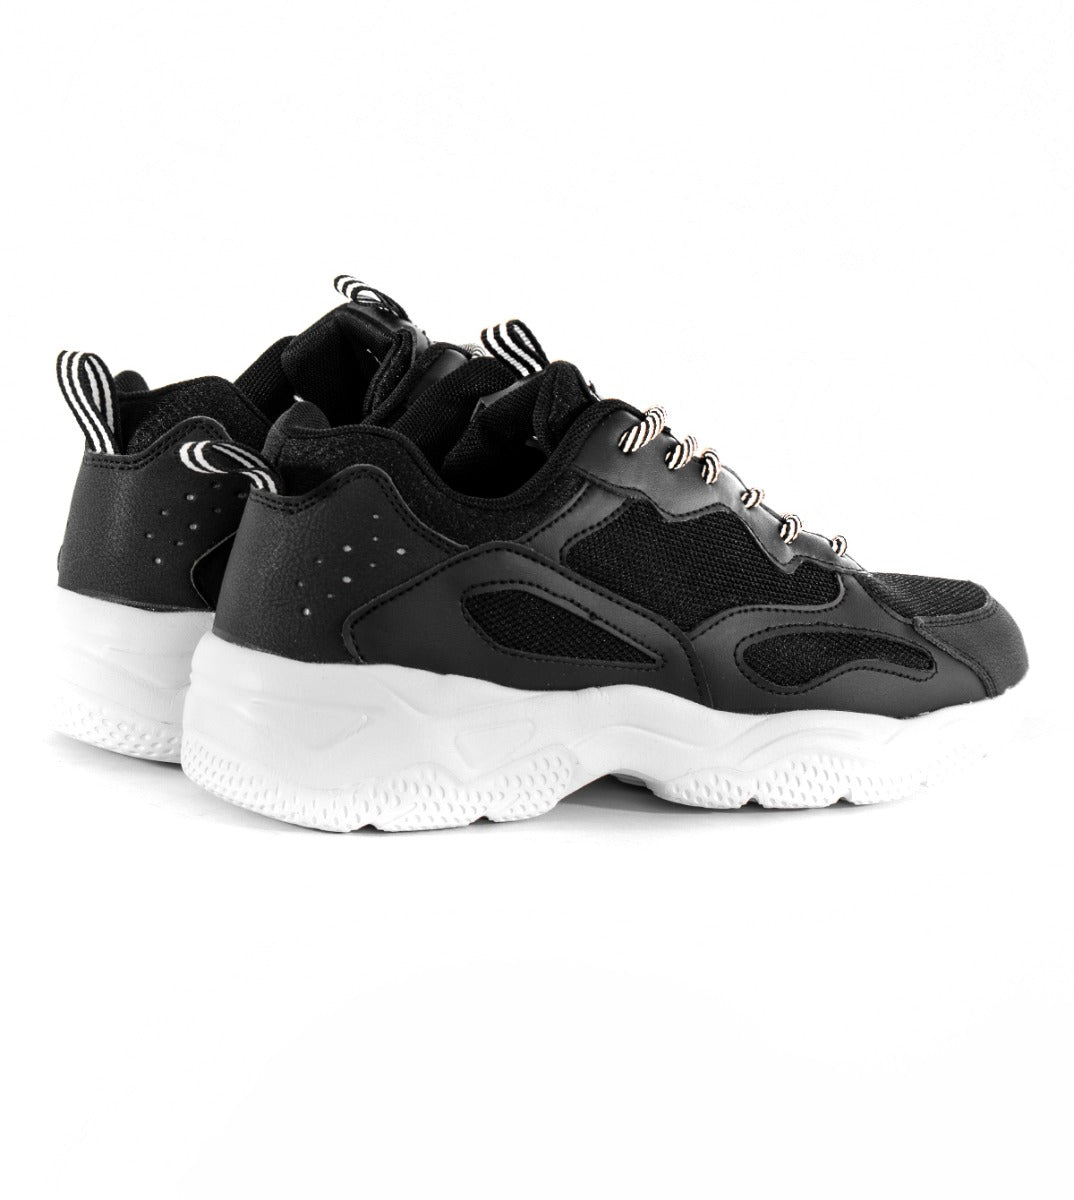 Scarpe Uomo Shoes Alta Sneakers Sportiva Casual Nera GIOSAL-S1078A